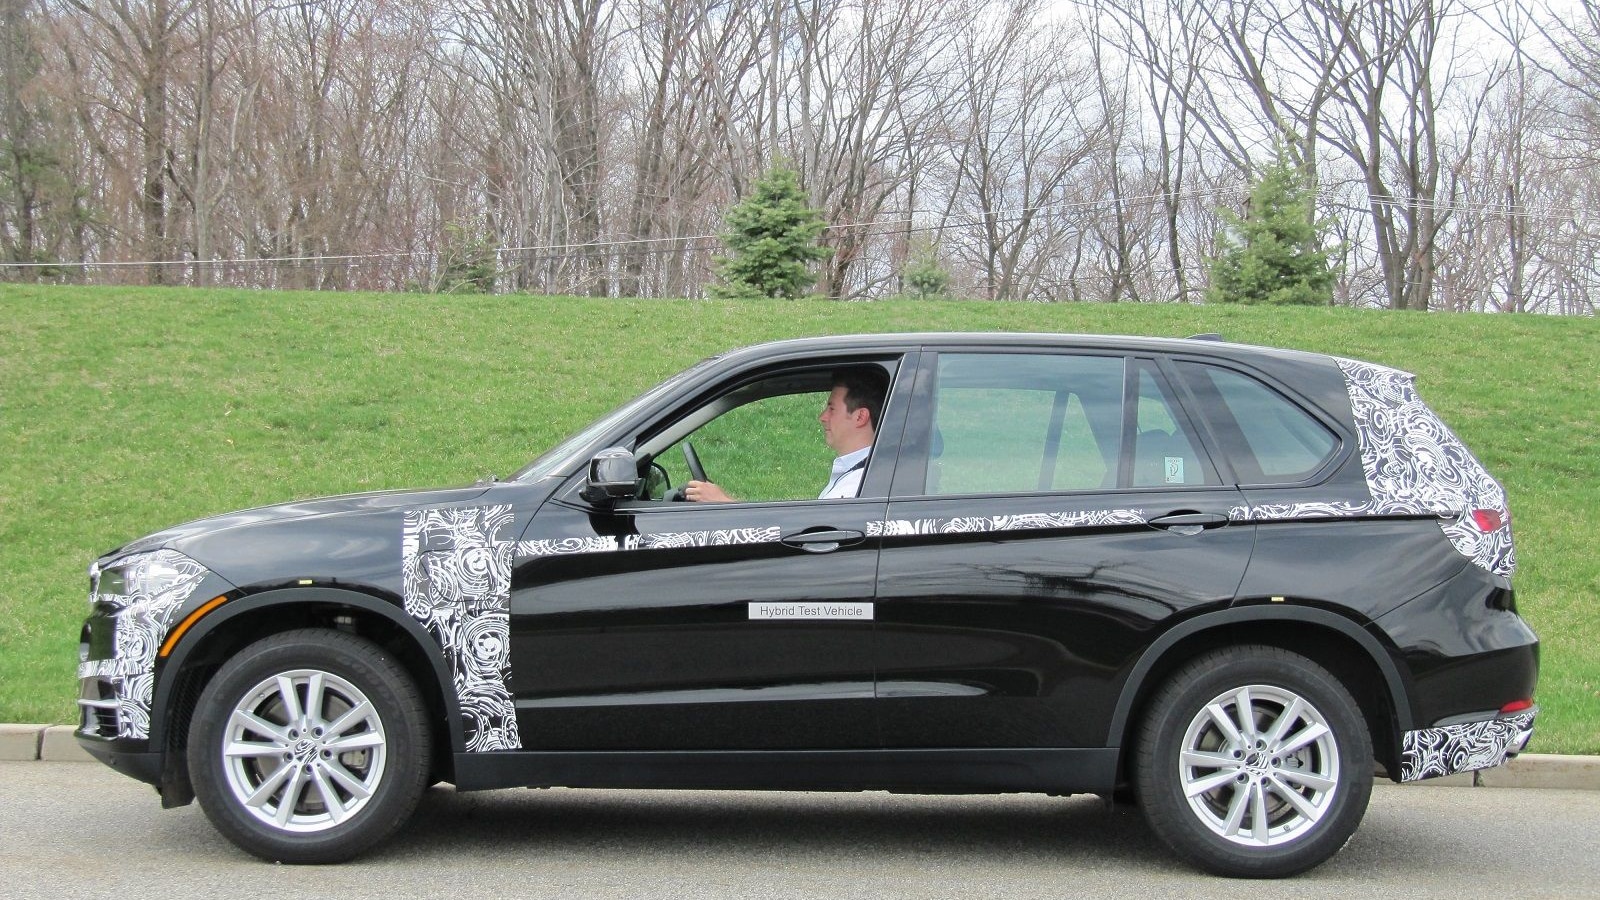 BMW X5 Plug-In Hybrid Prototype: We Drive Future Electric SUV